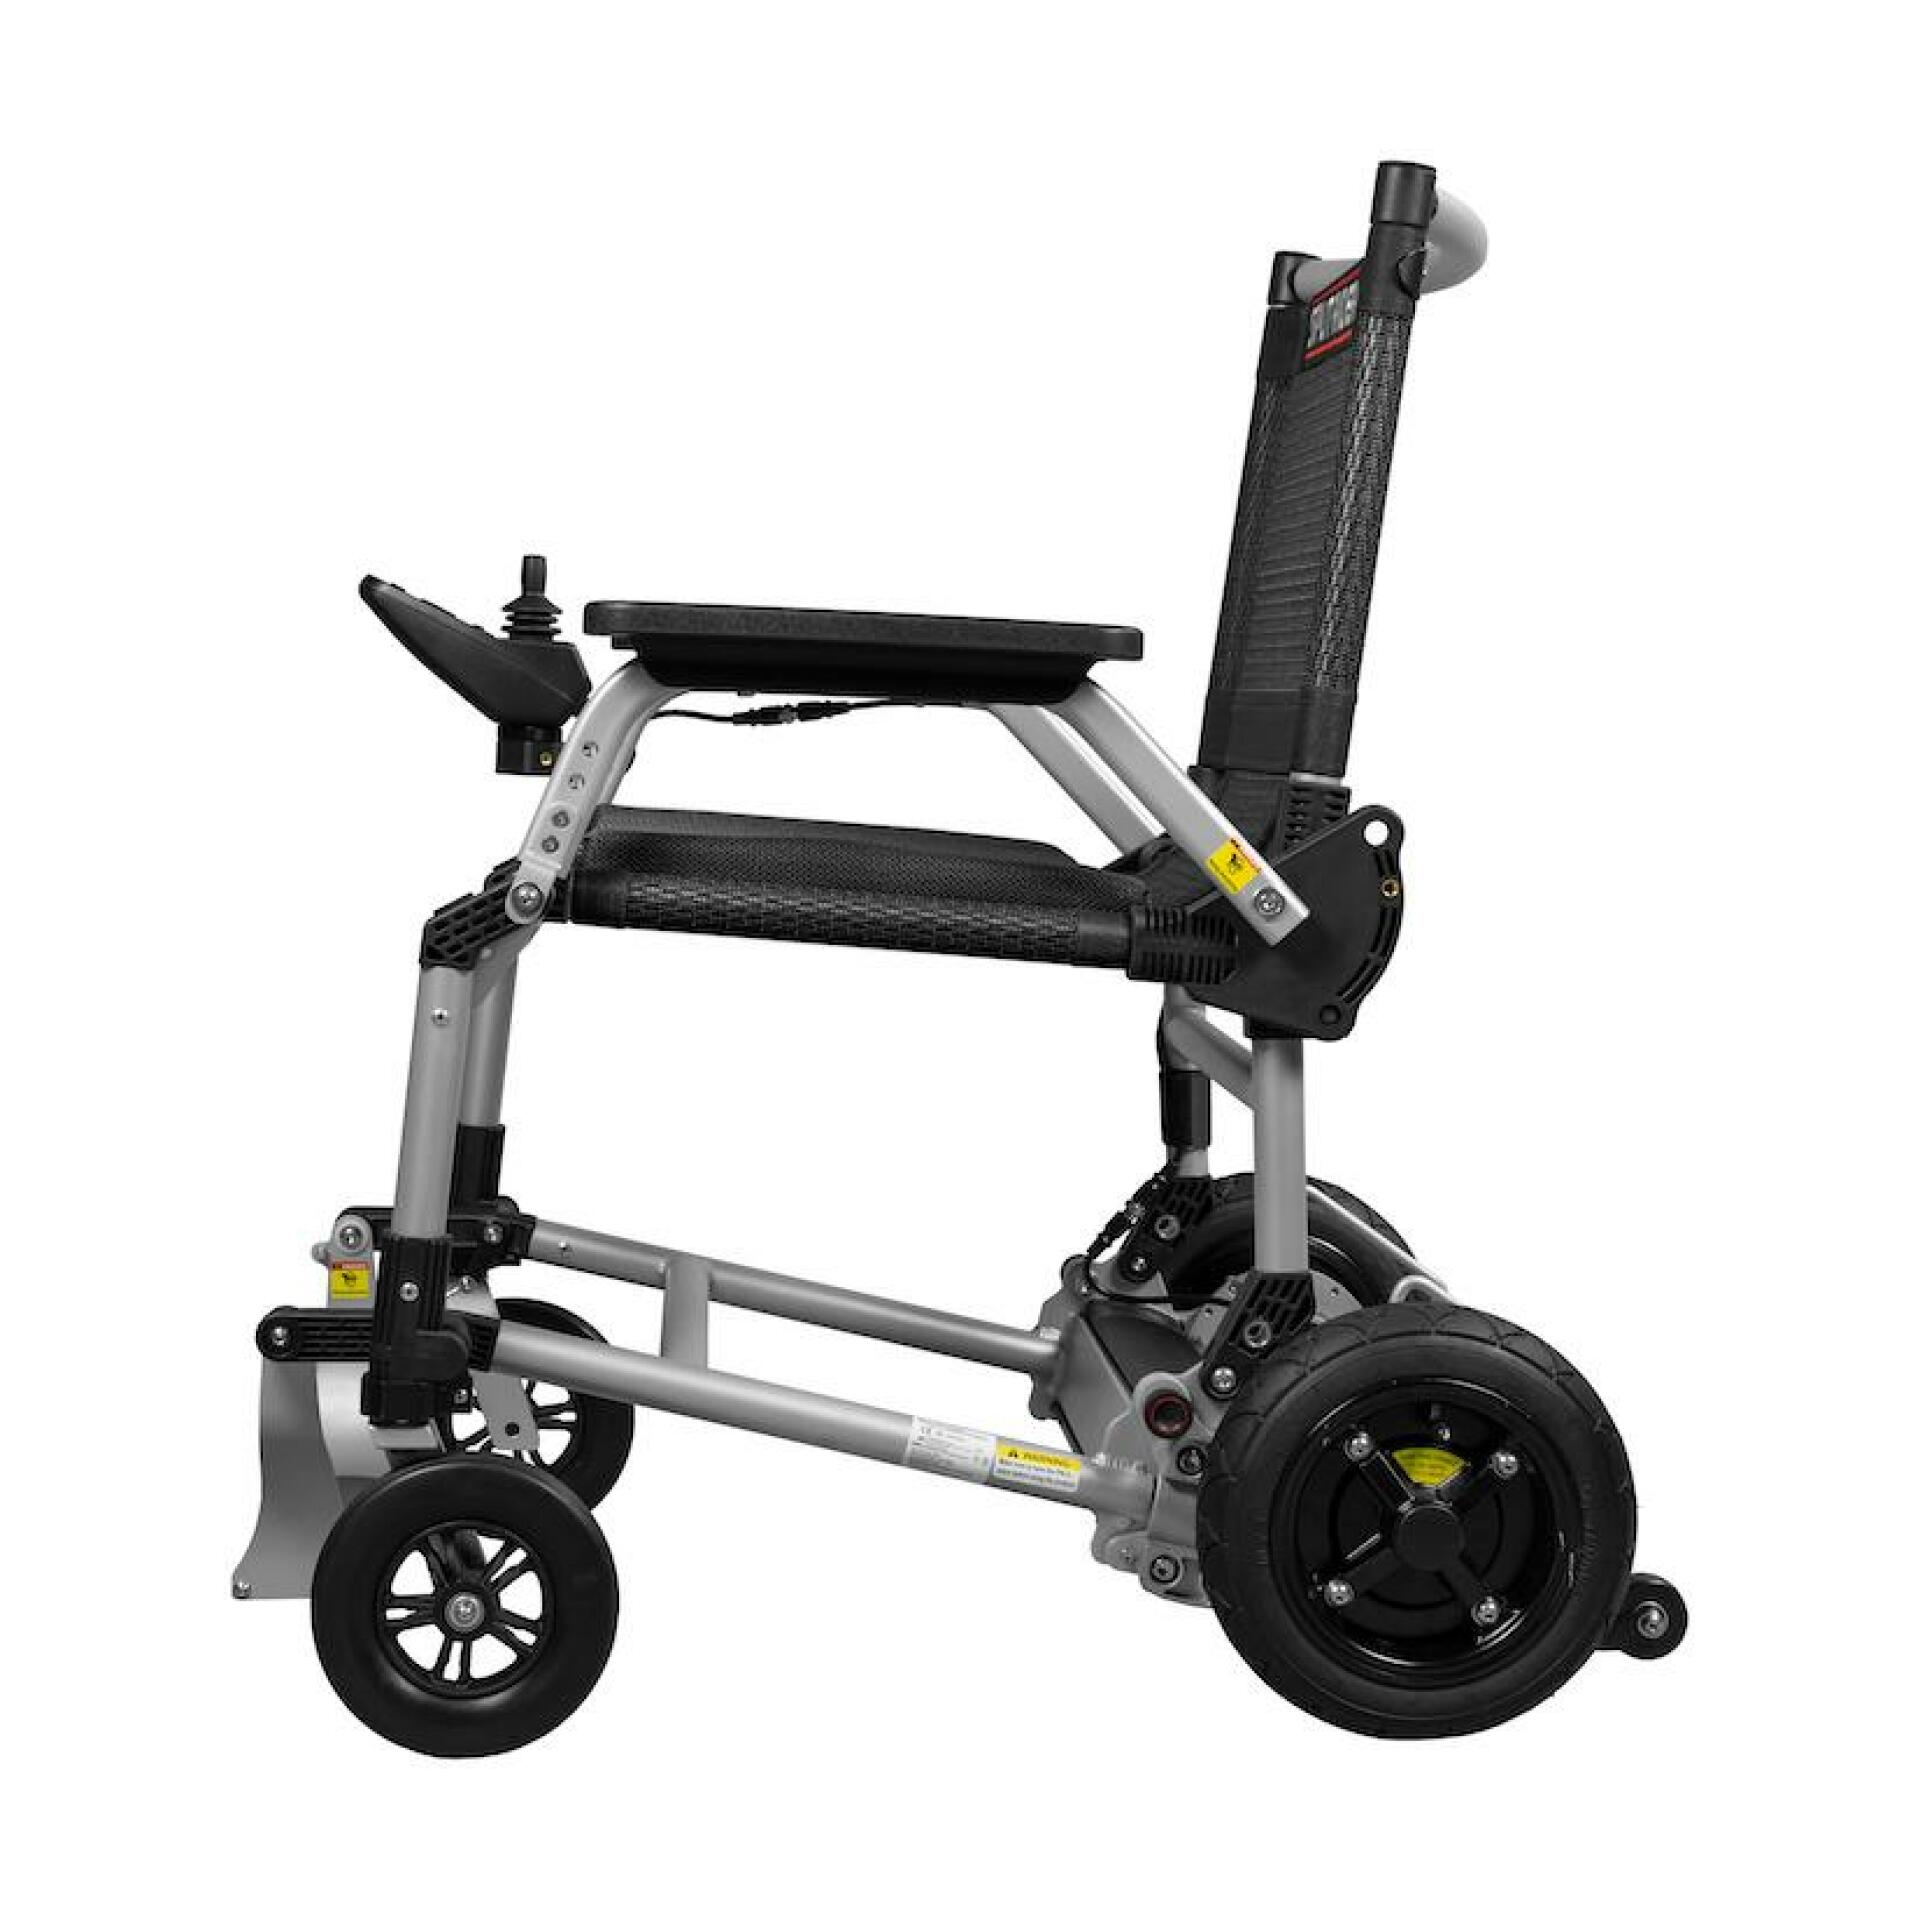 Elektrische opvouwbare rolstoel SplitRider van e-Ability